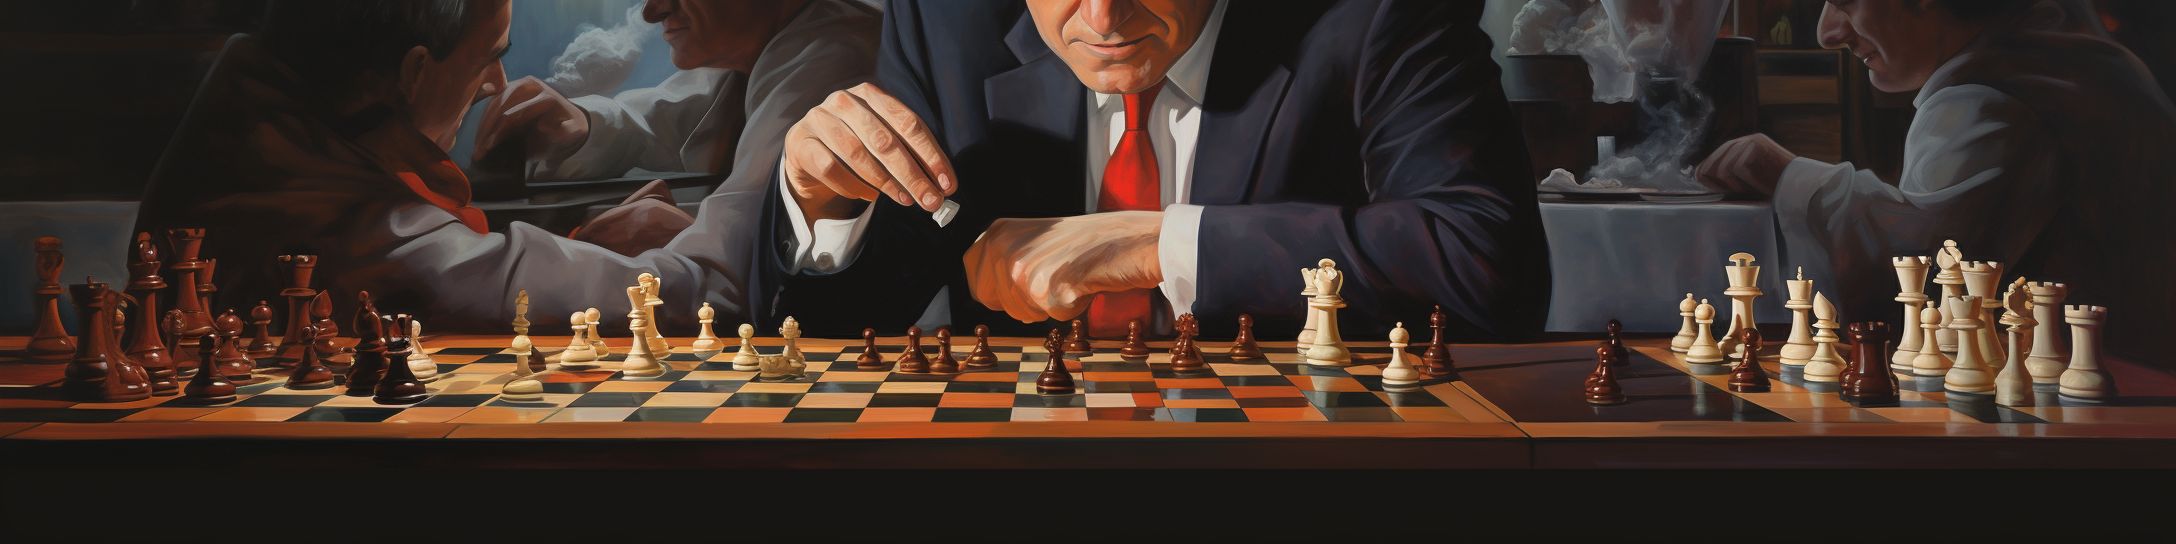 Kasparov face au monde